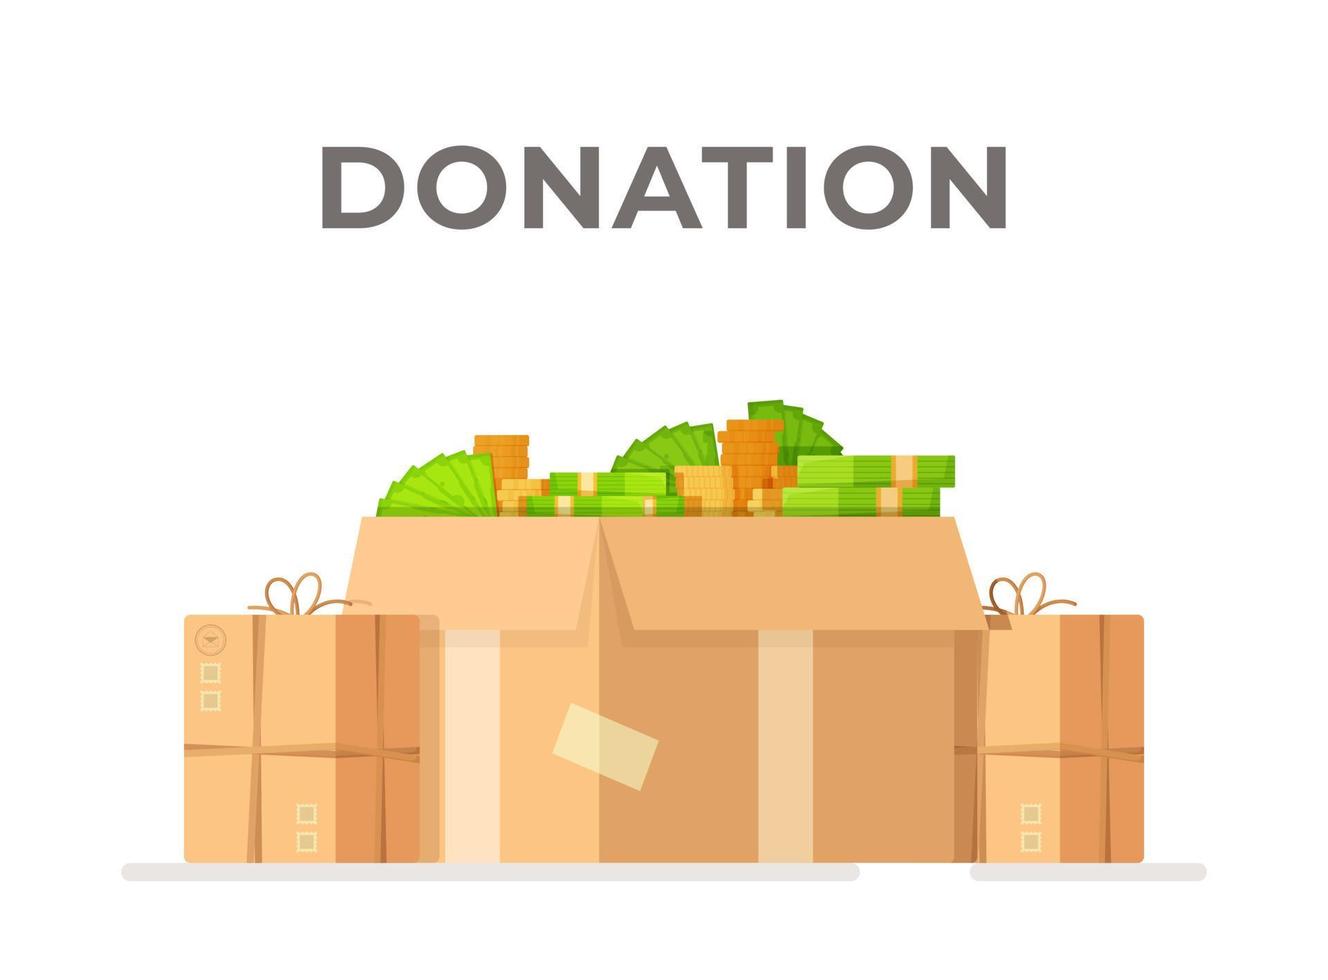 vektor illustration av en lugg av gåva lådor full av pengar.